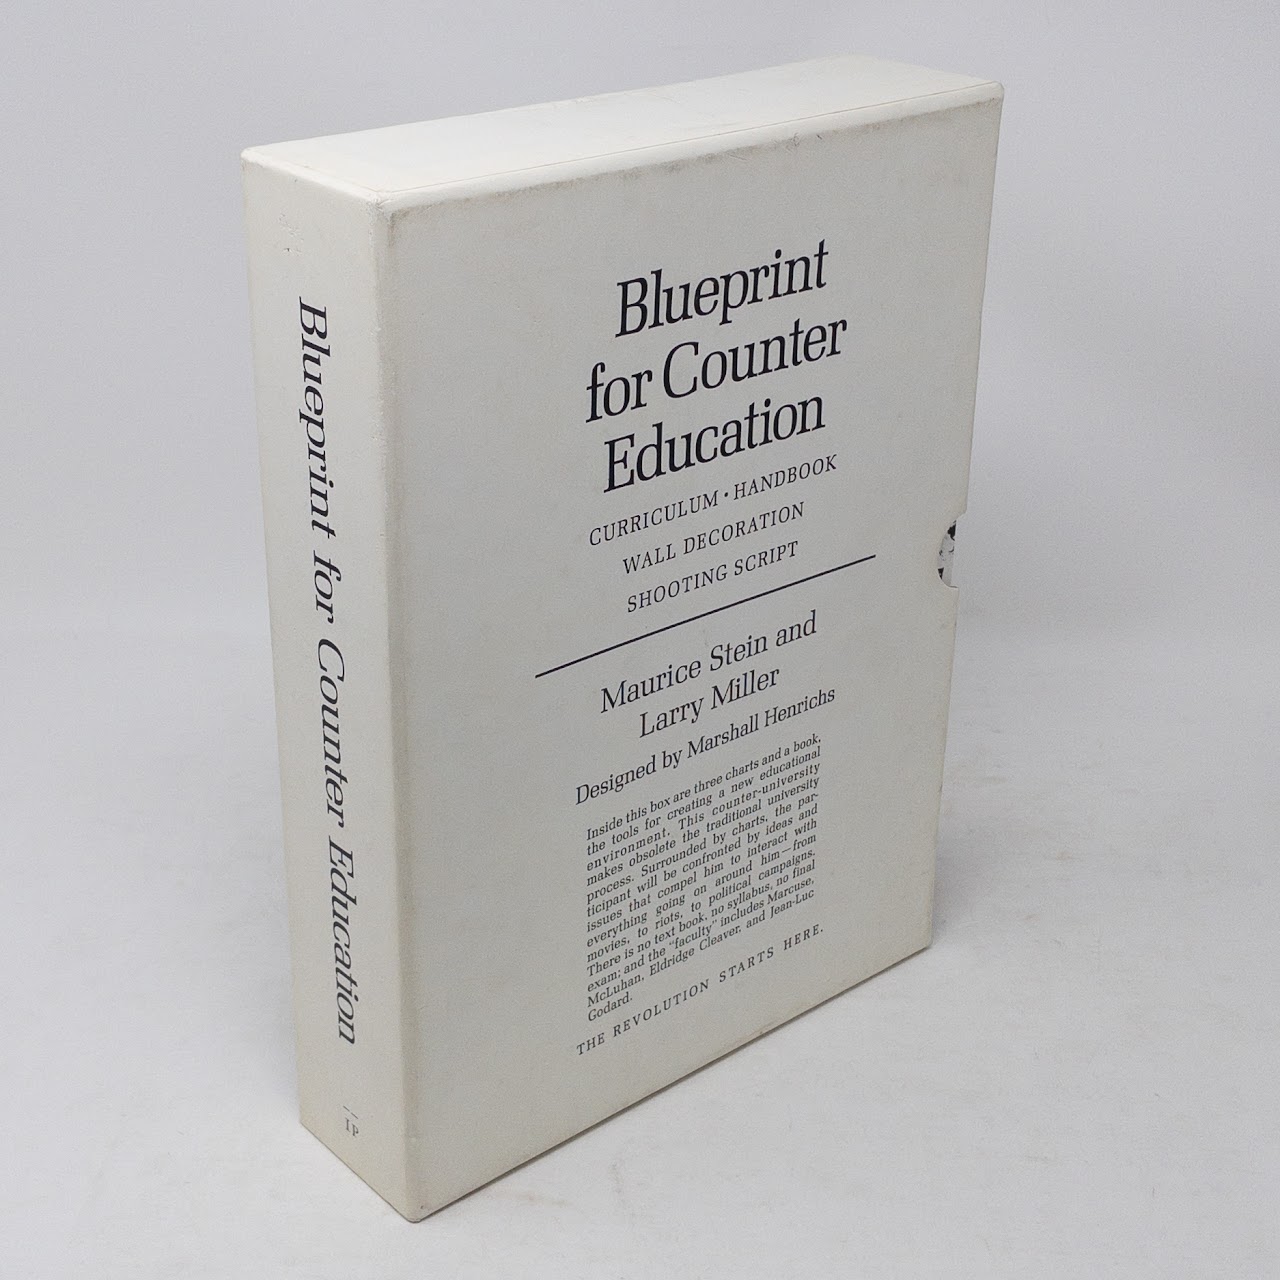 Maurice Stein & Larry Miller: Blueprint for Counter Education Reprint Set